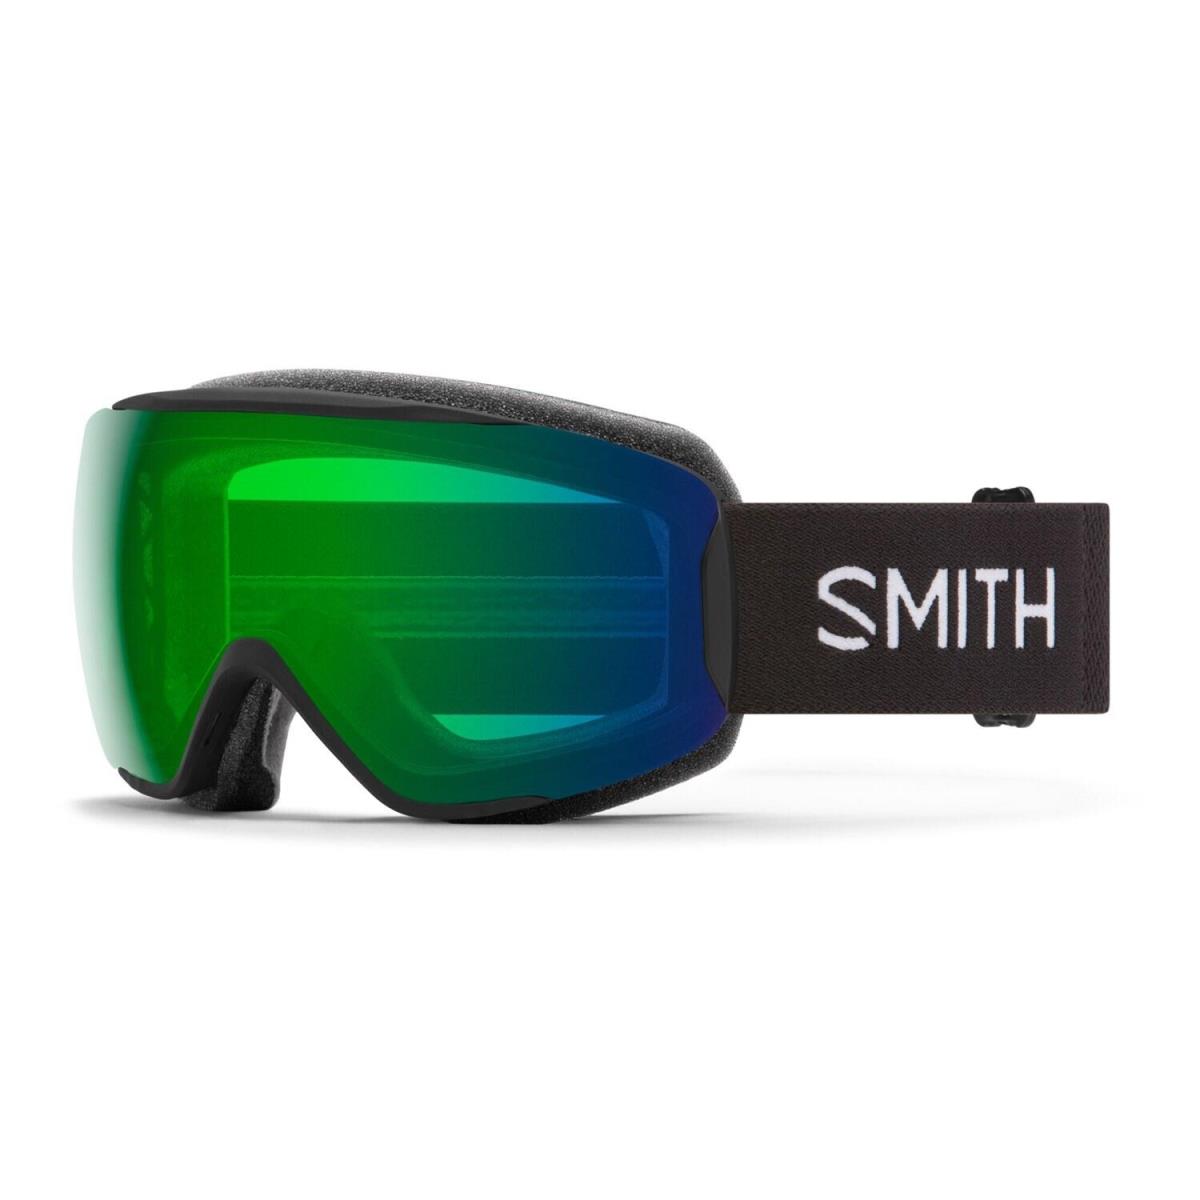 Smith Moment Ski / Snow Goggles Black Frame Everyday Green Mirror Lens